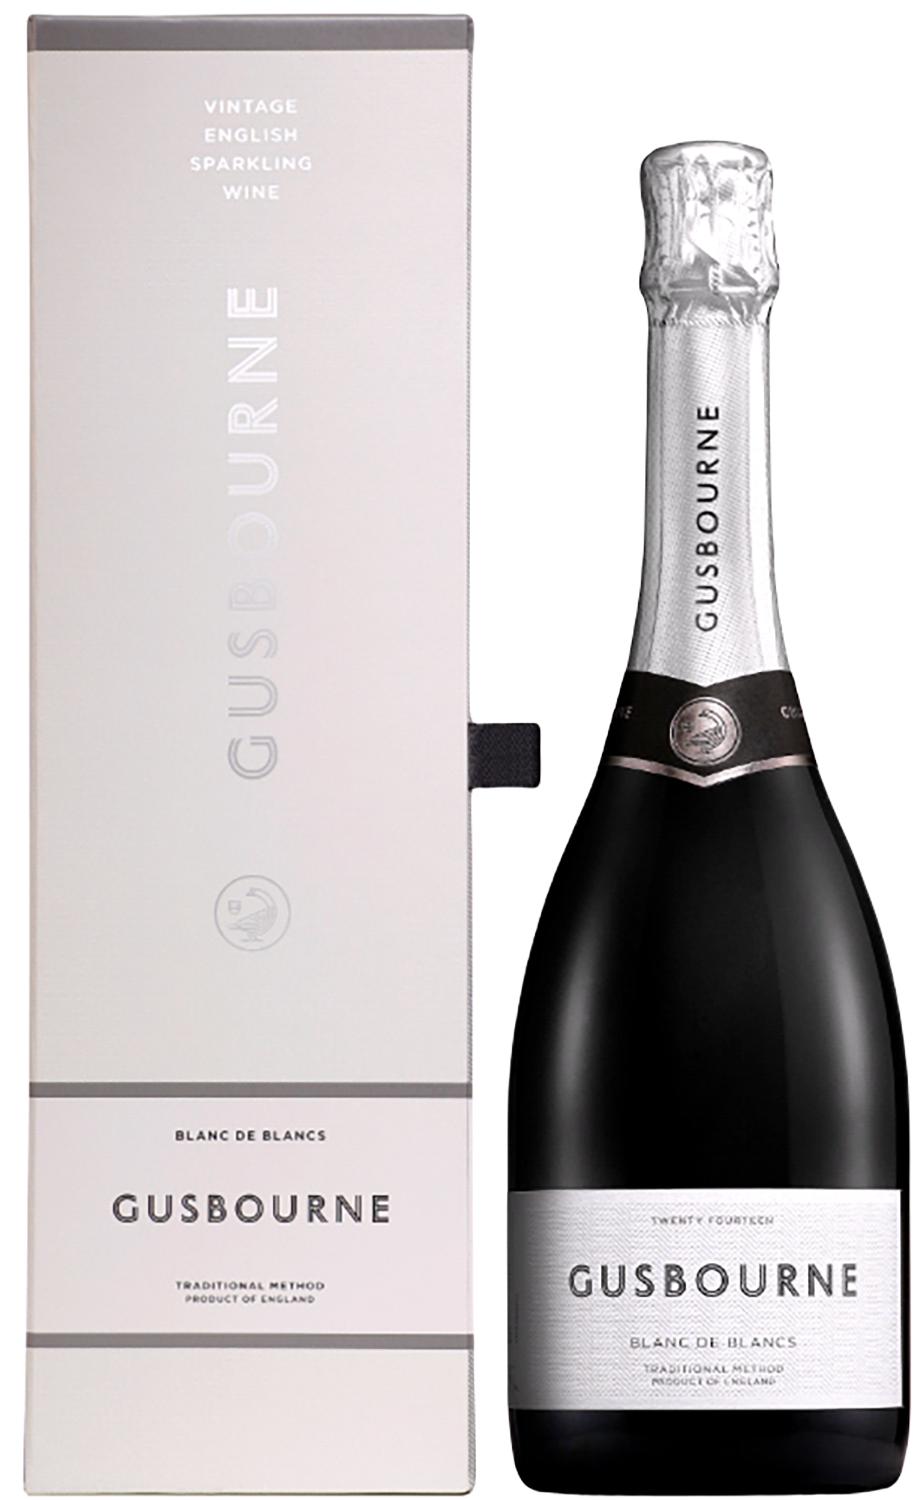 Gusbourne Blanc de Blancs Brut (gift box) blanc de blancs brut nature champagne aoс laherte freres gift box